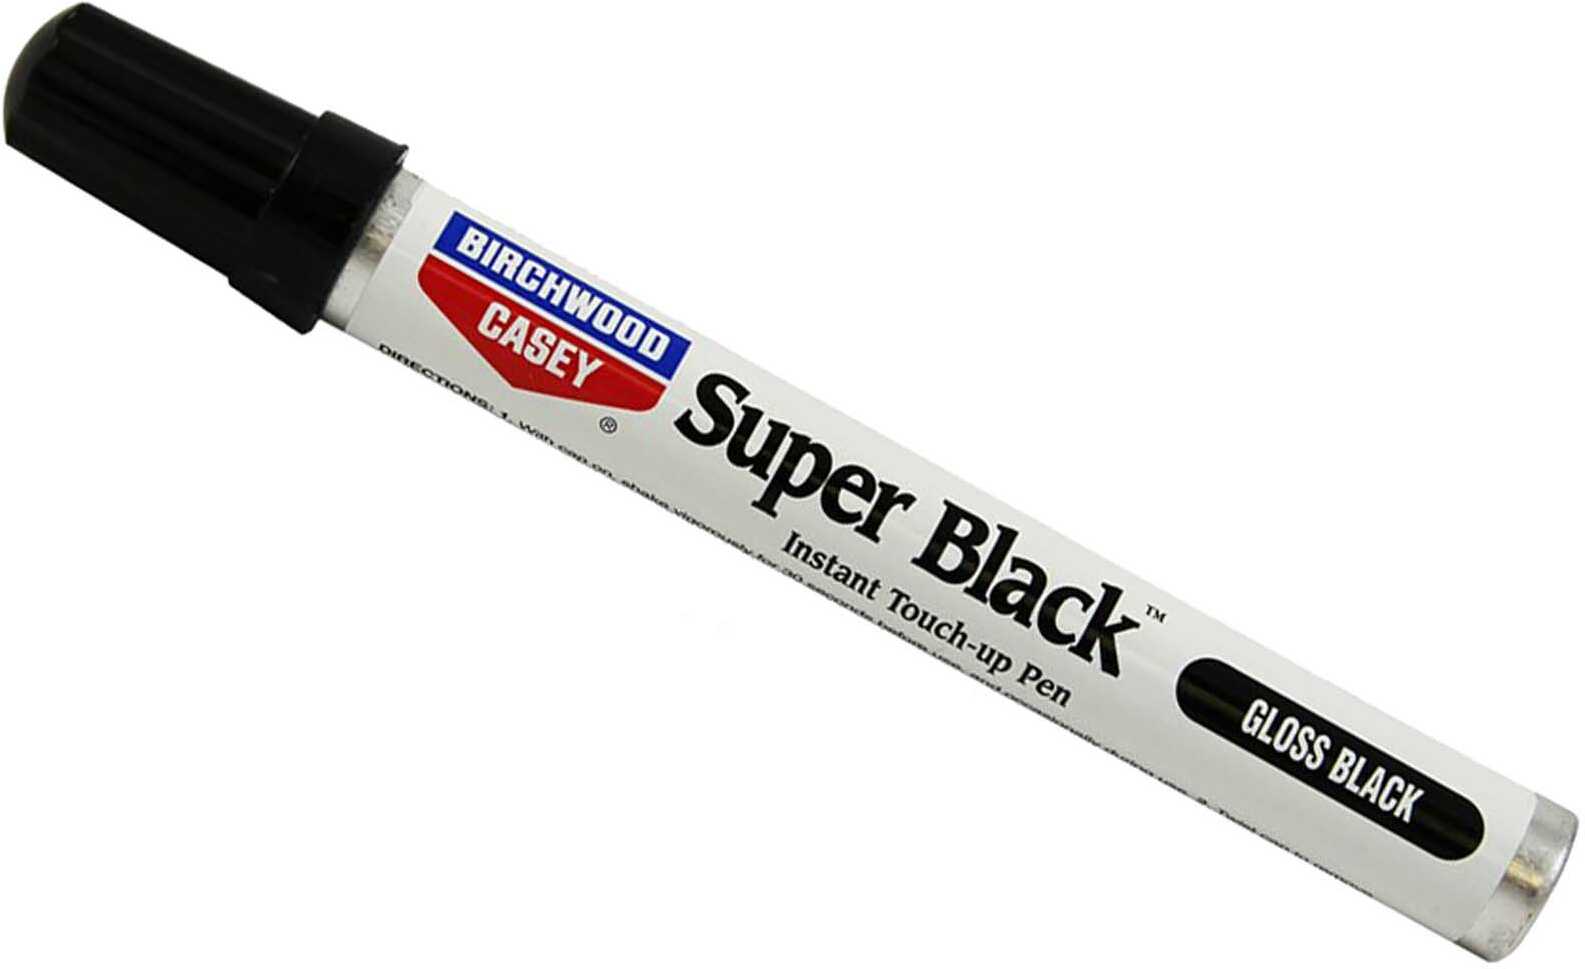 Birchwood Casey SUper Black Touch Up Pen Gloss 2Oz.